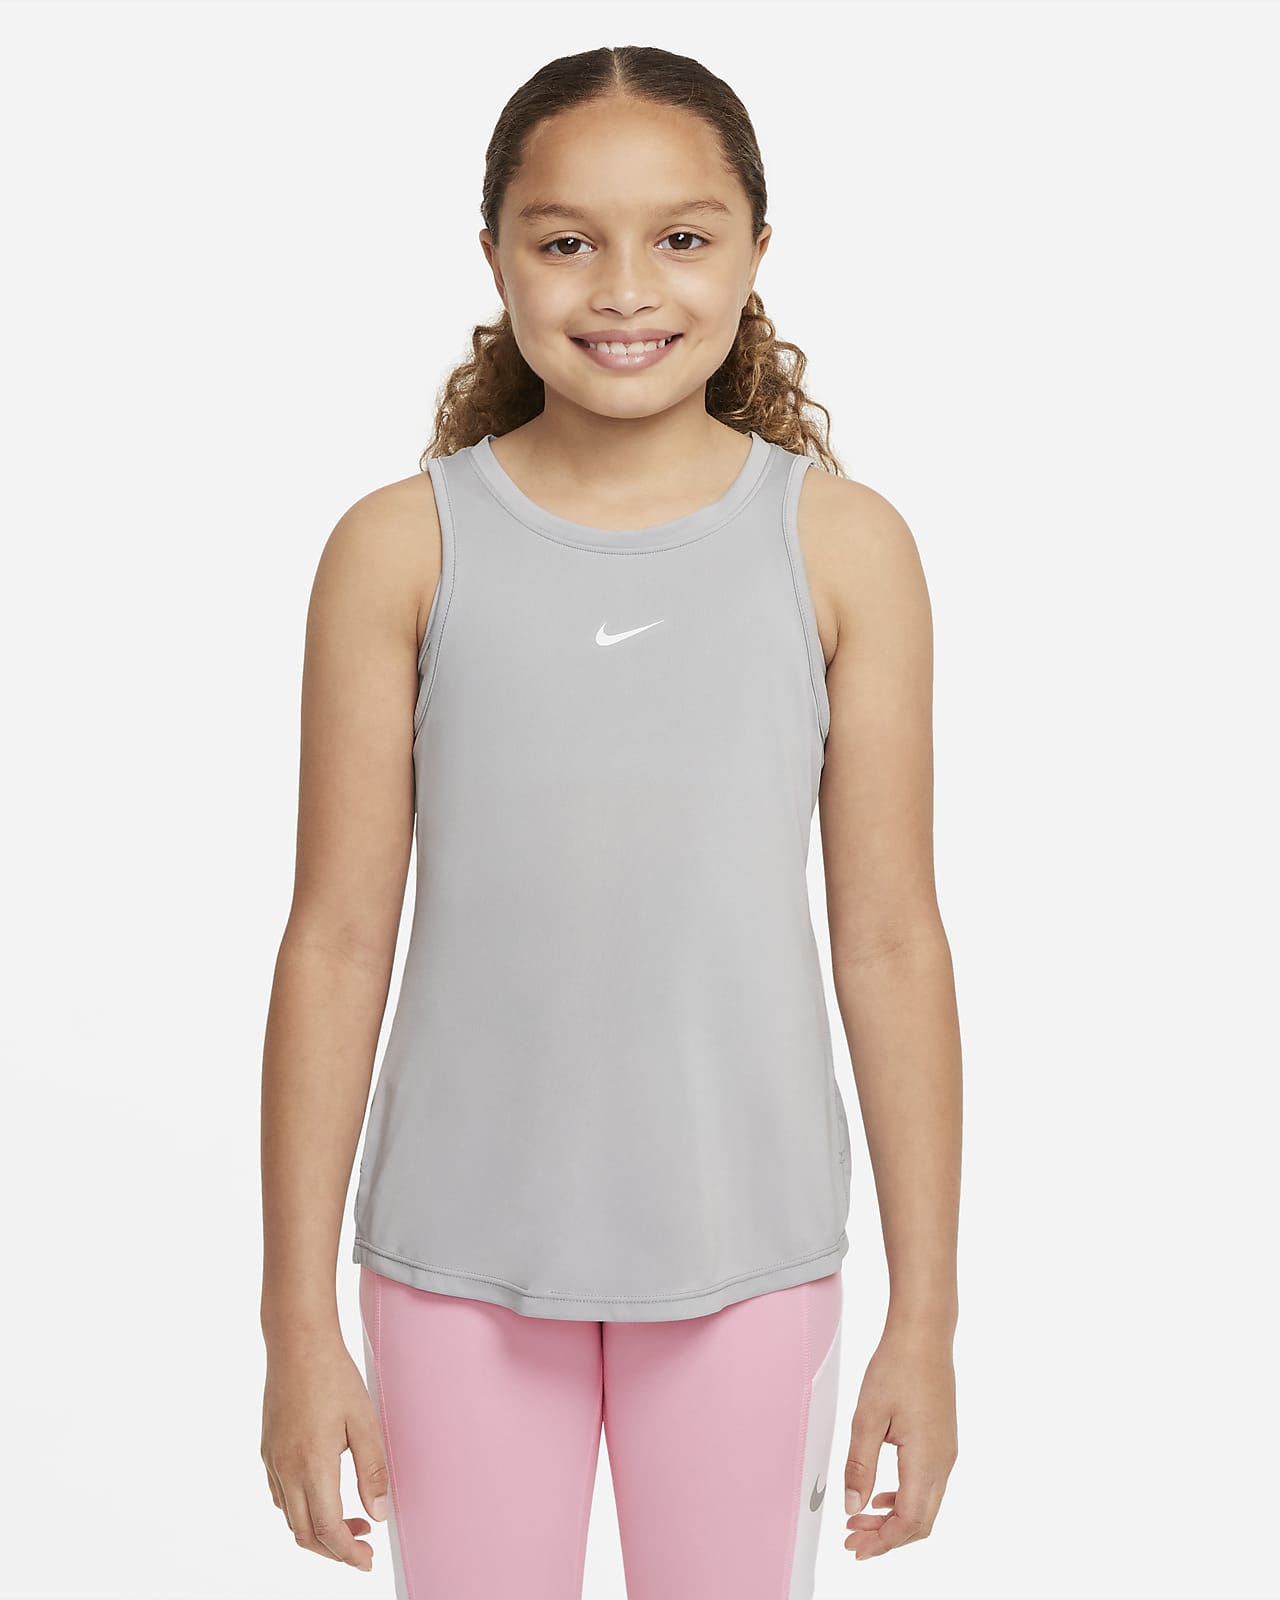 Nike Girl's Dri-Fit Tank Top Sleeveless Shirt